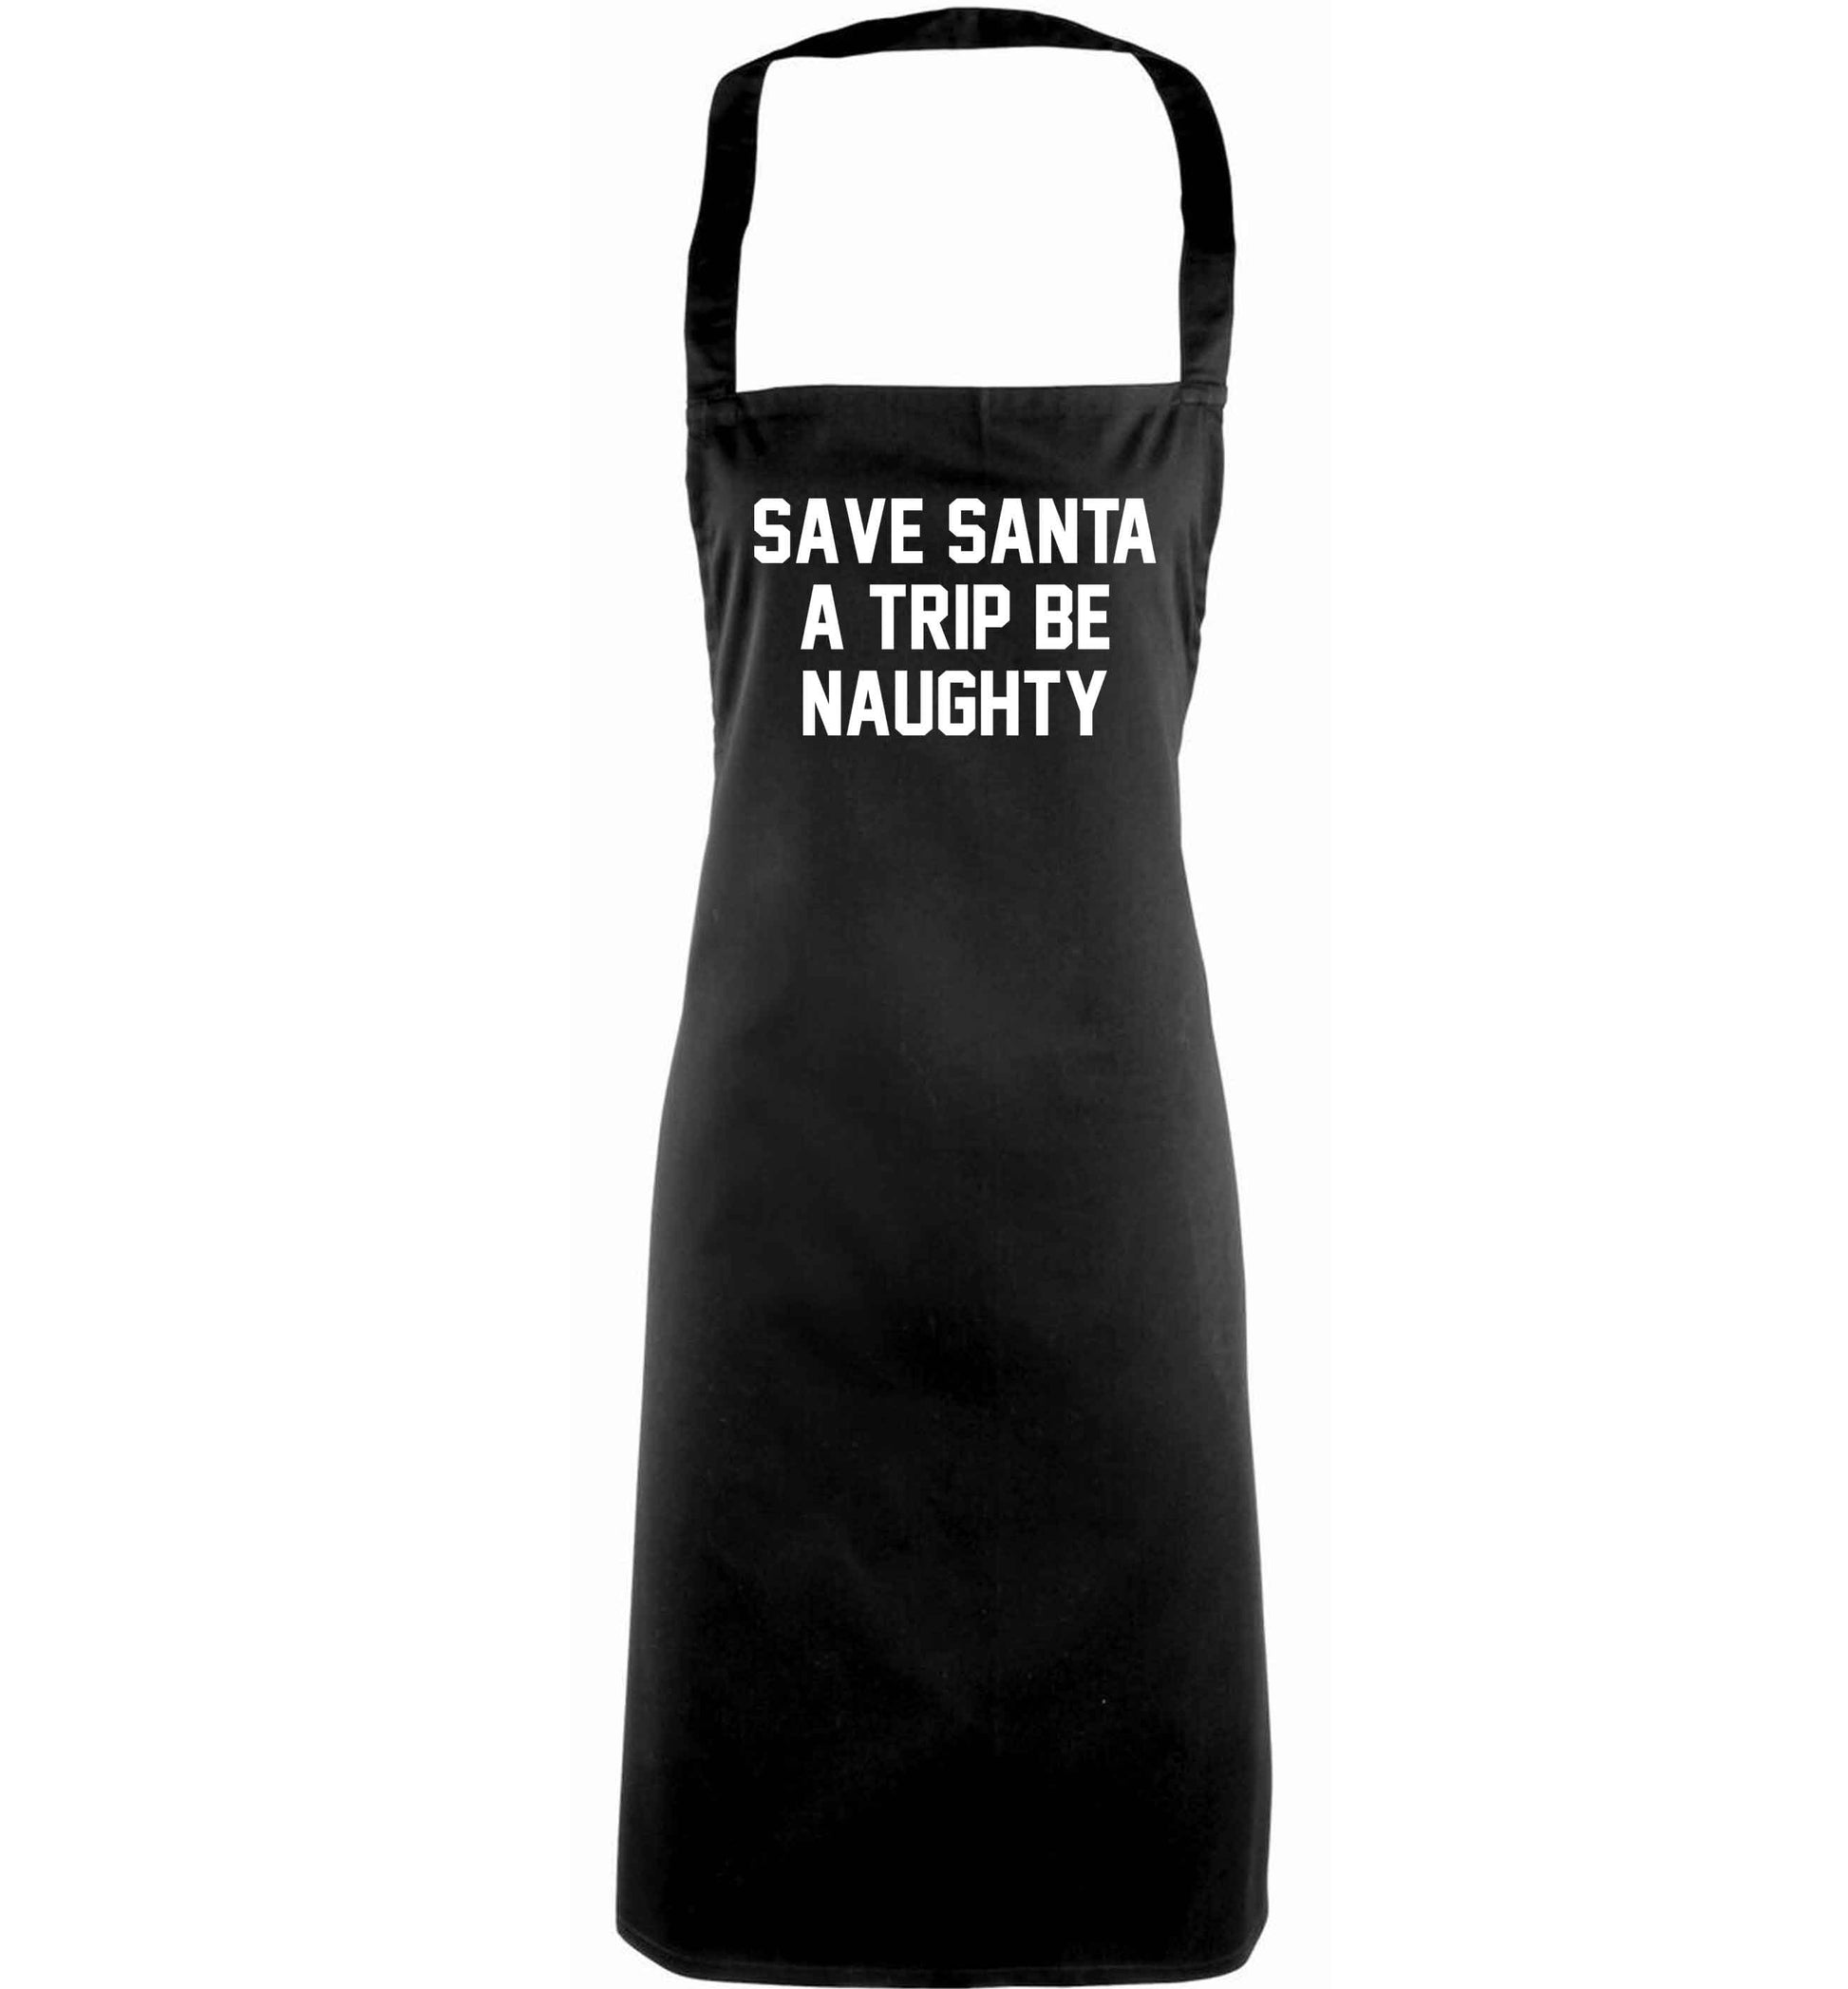 Save Santa a trip be naughty adults black apron